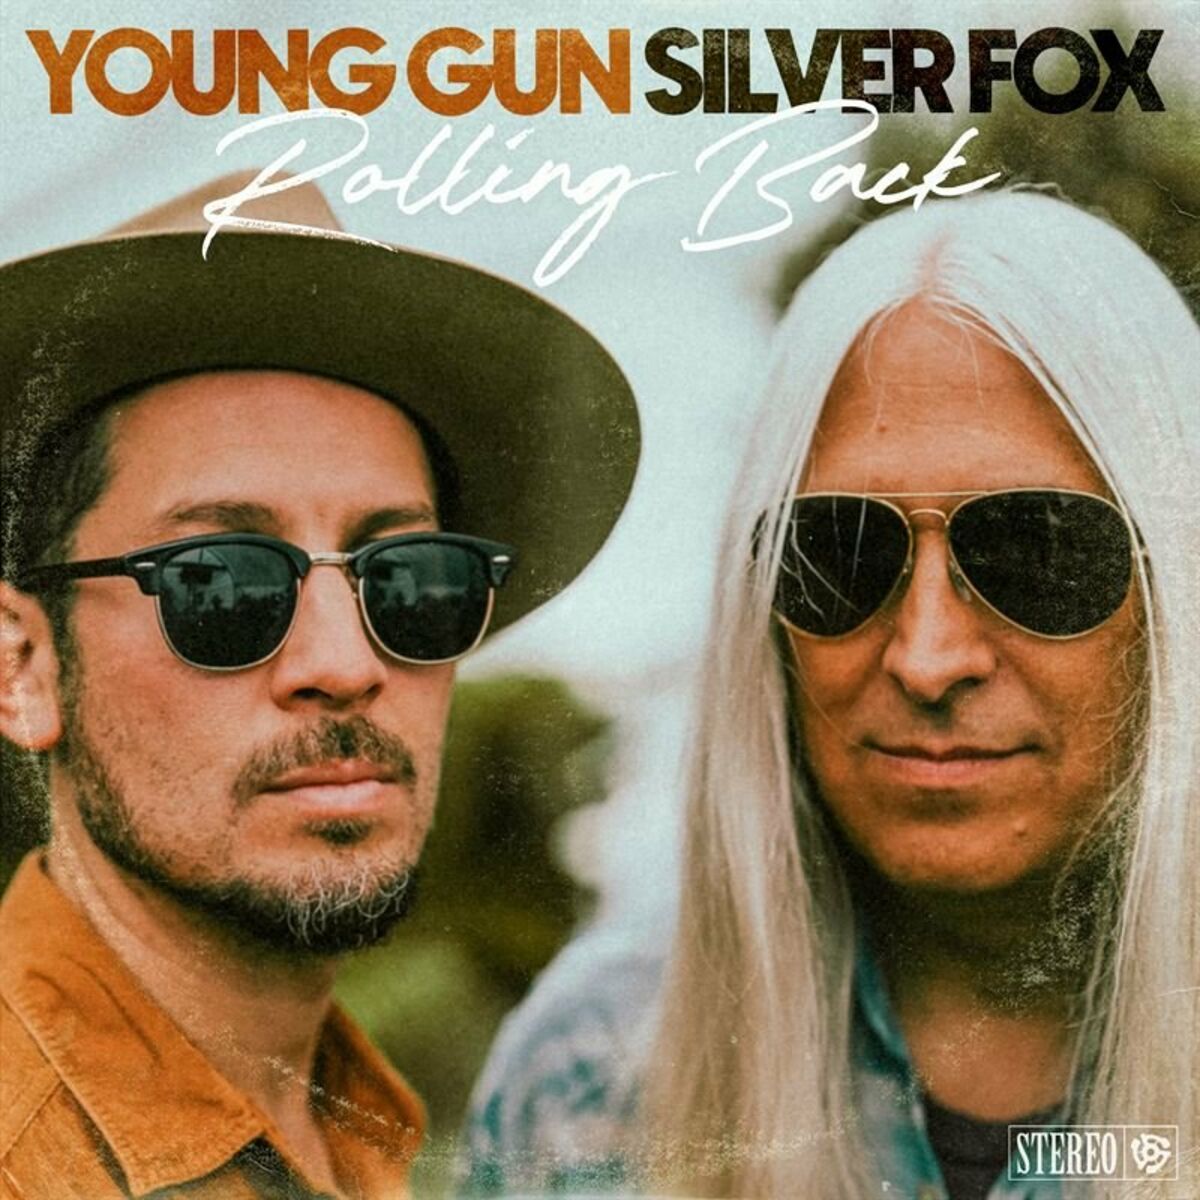 Young Gun Silver Fox: albums, songs, playlists | Listen on Deezer